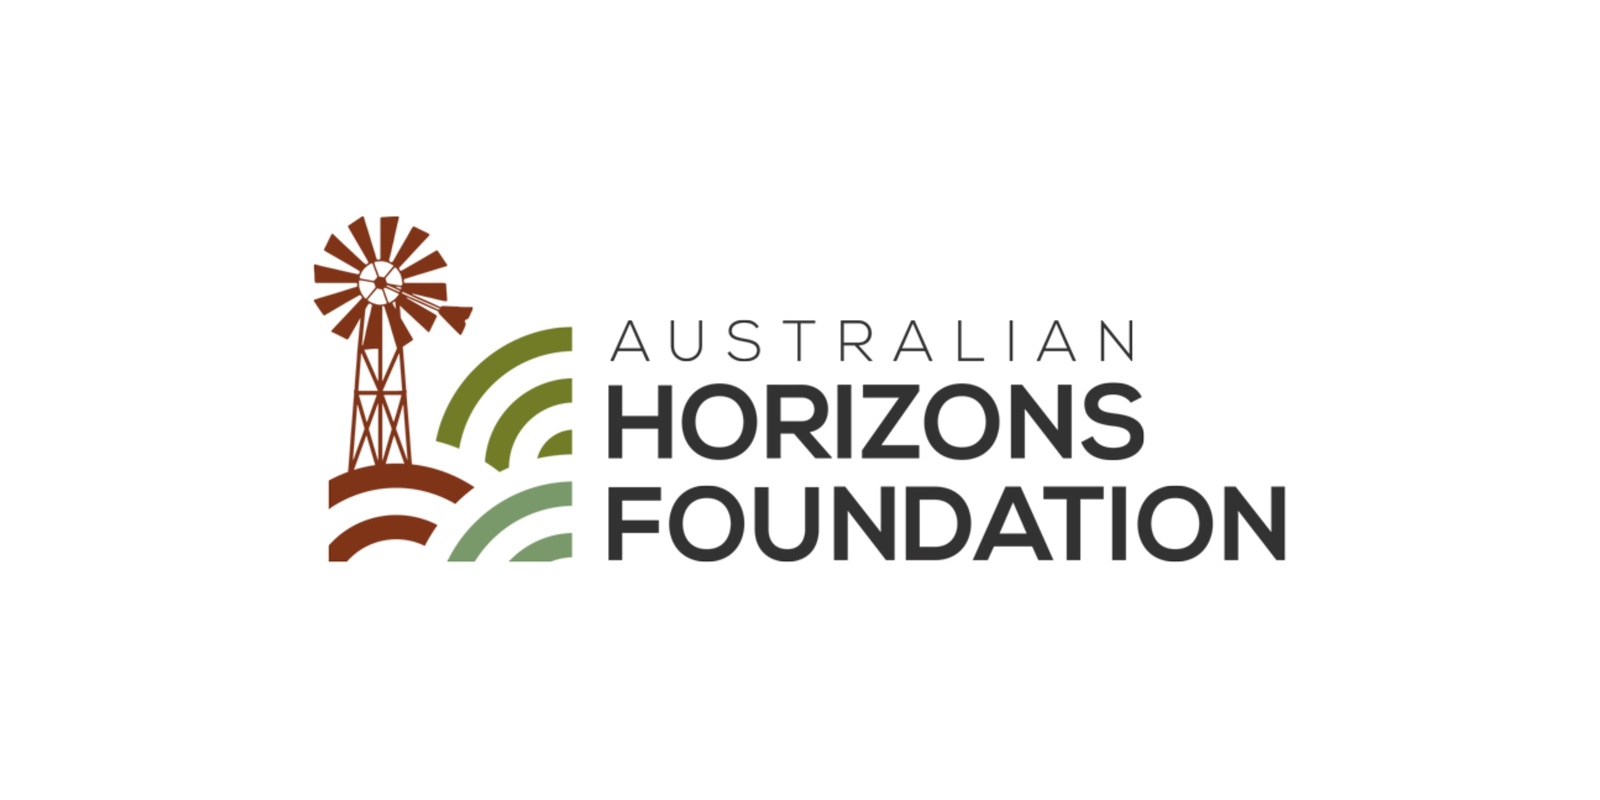 AUSTRALIAN HORIZONS FOUNDATION's banner